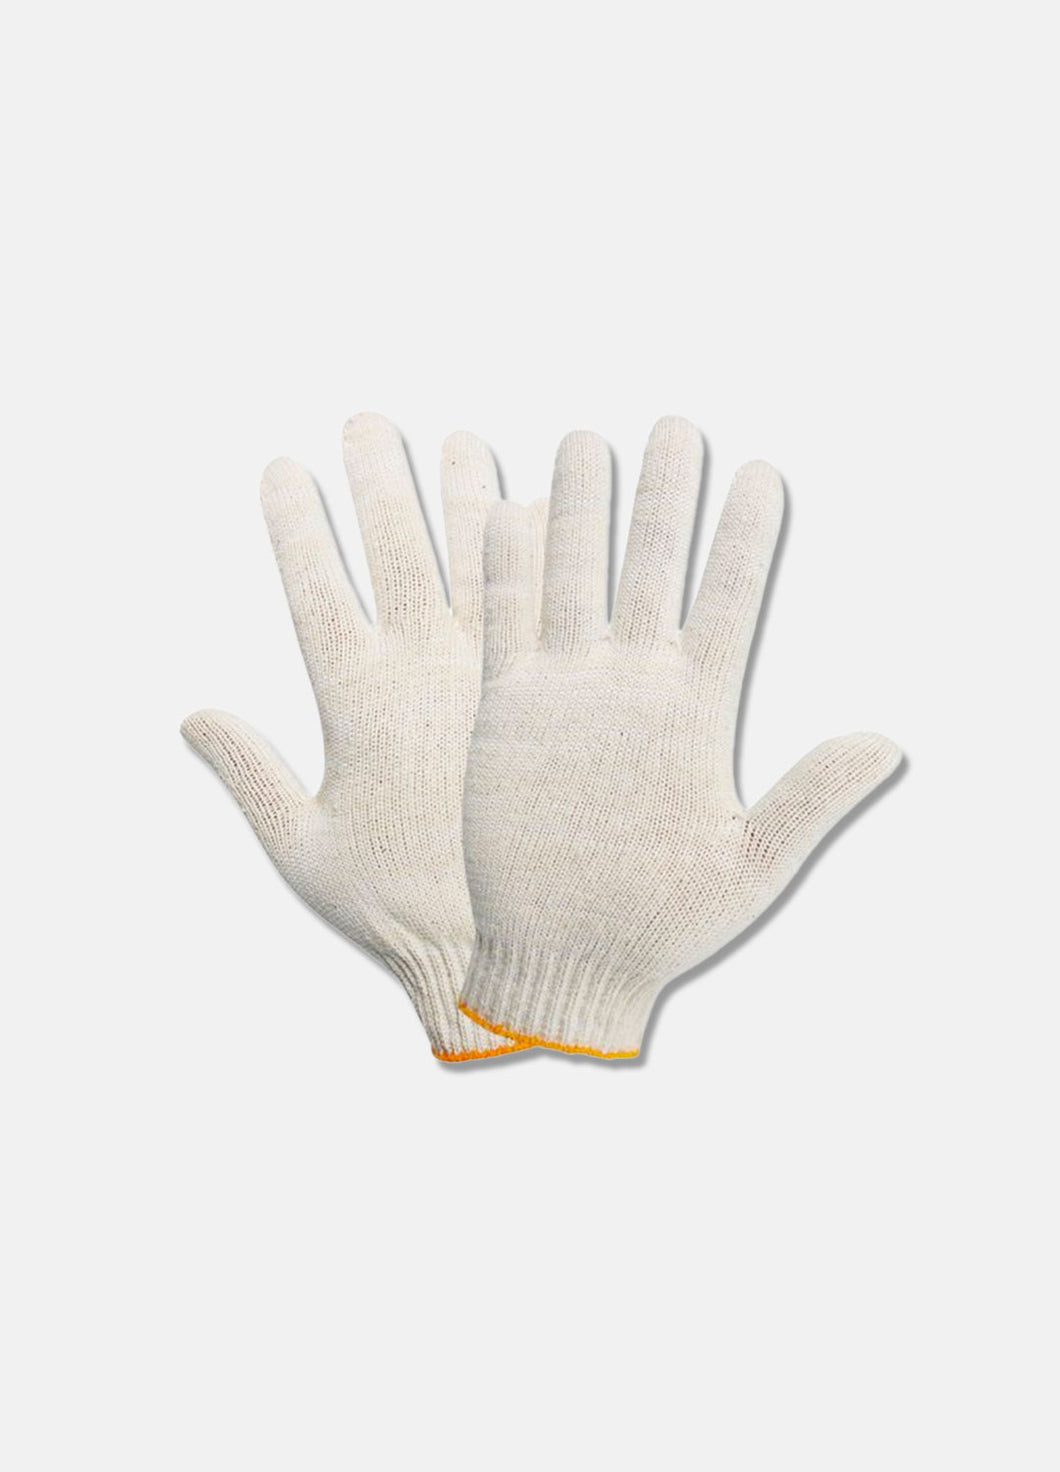 (assi) cotton gloves 10prs 면장갑